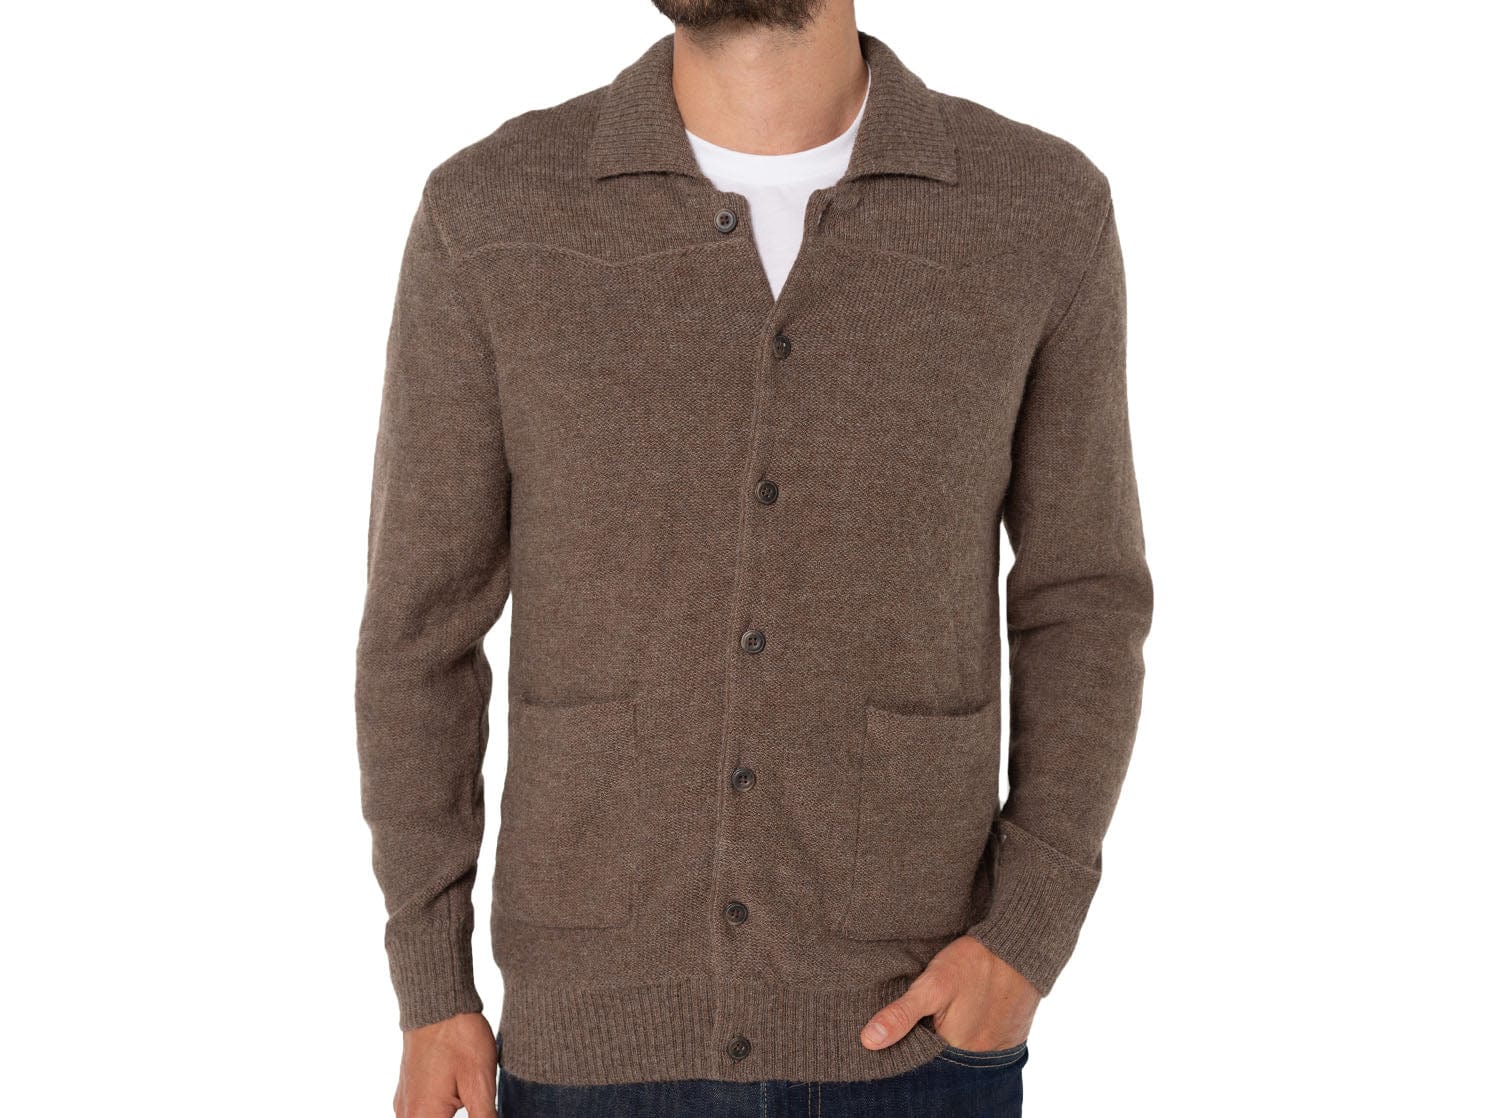 Western Sweater Jacket Brownstone